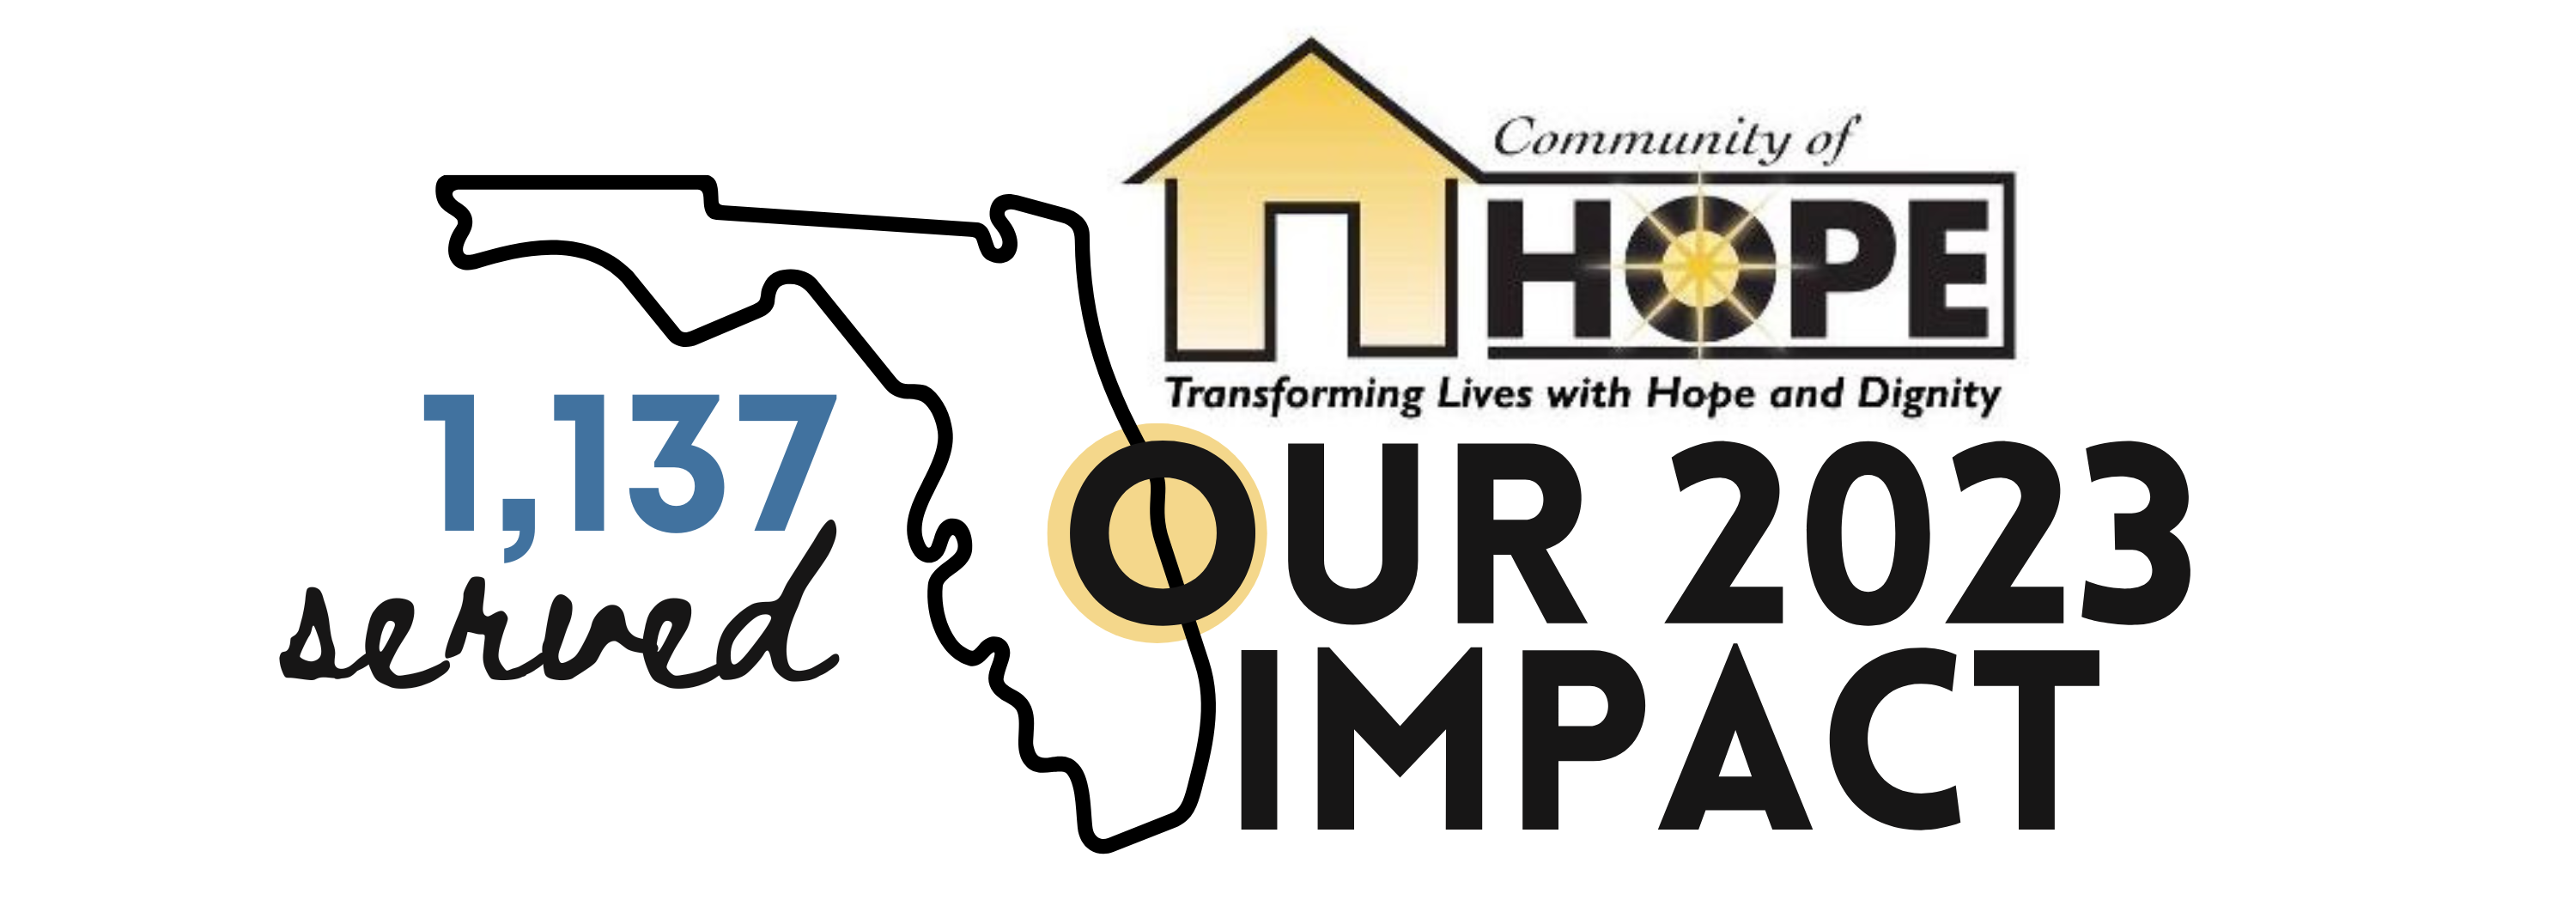 2023 Community of Hope Impact Brevard Florida